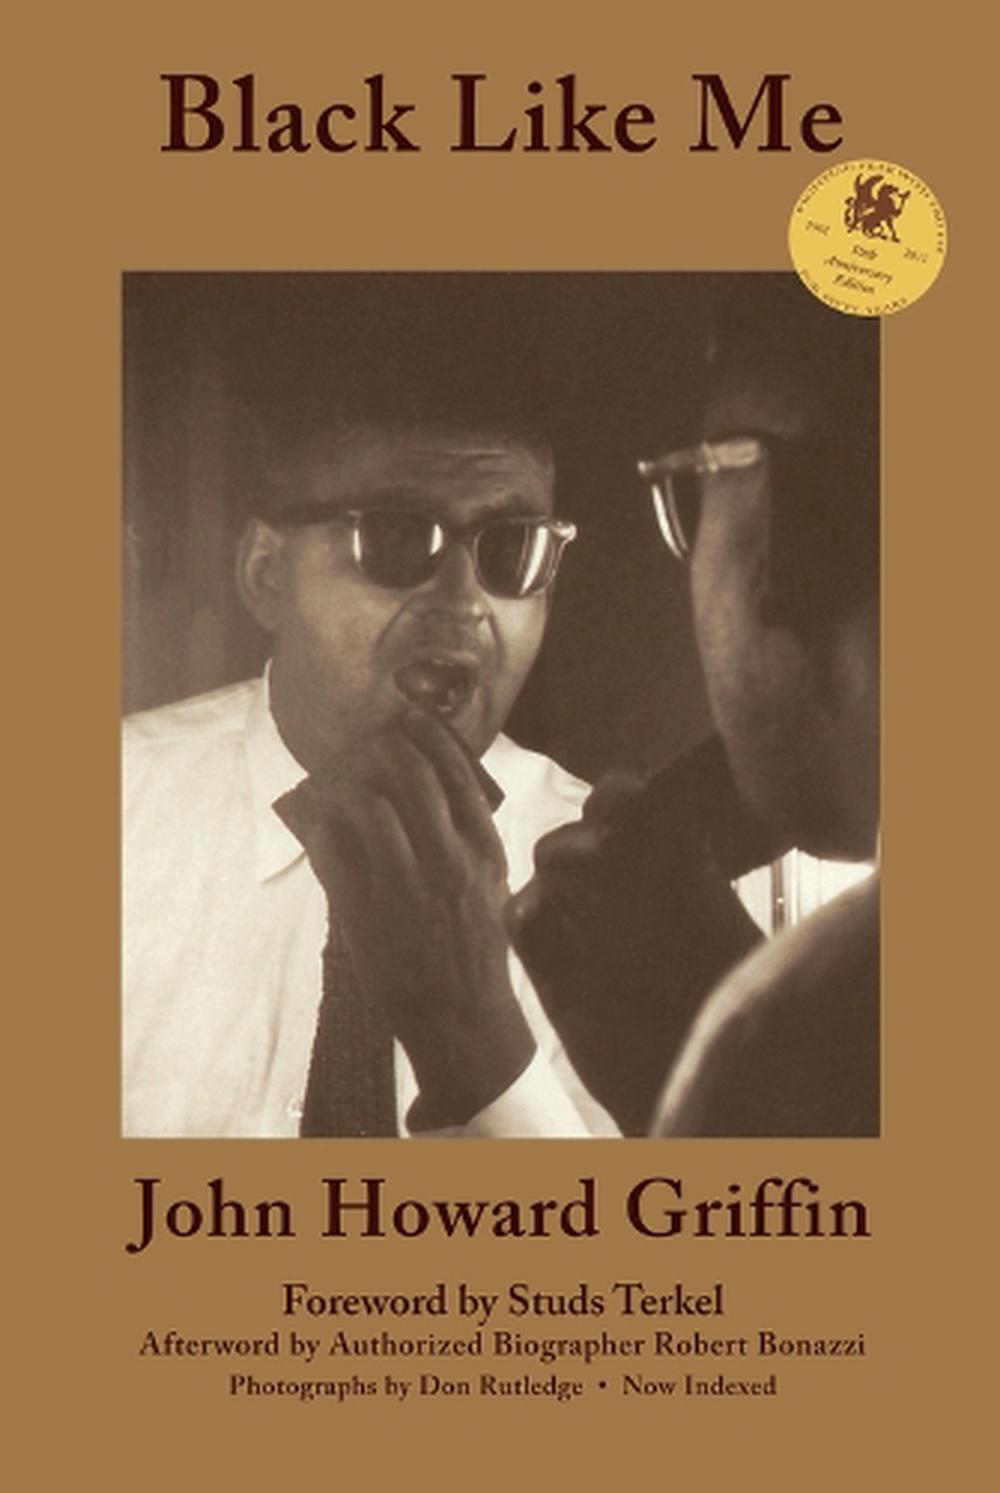 black-like-me-by-john-howard-griffin-hardcover-9780916727680-buy